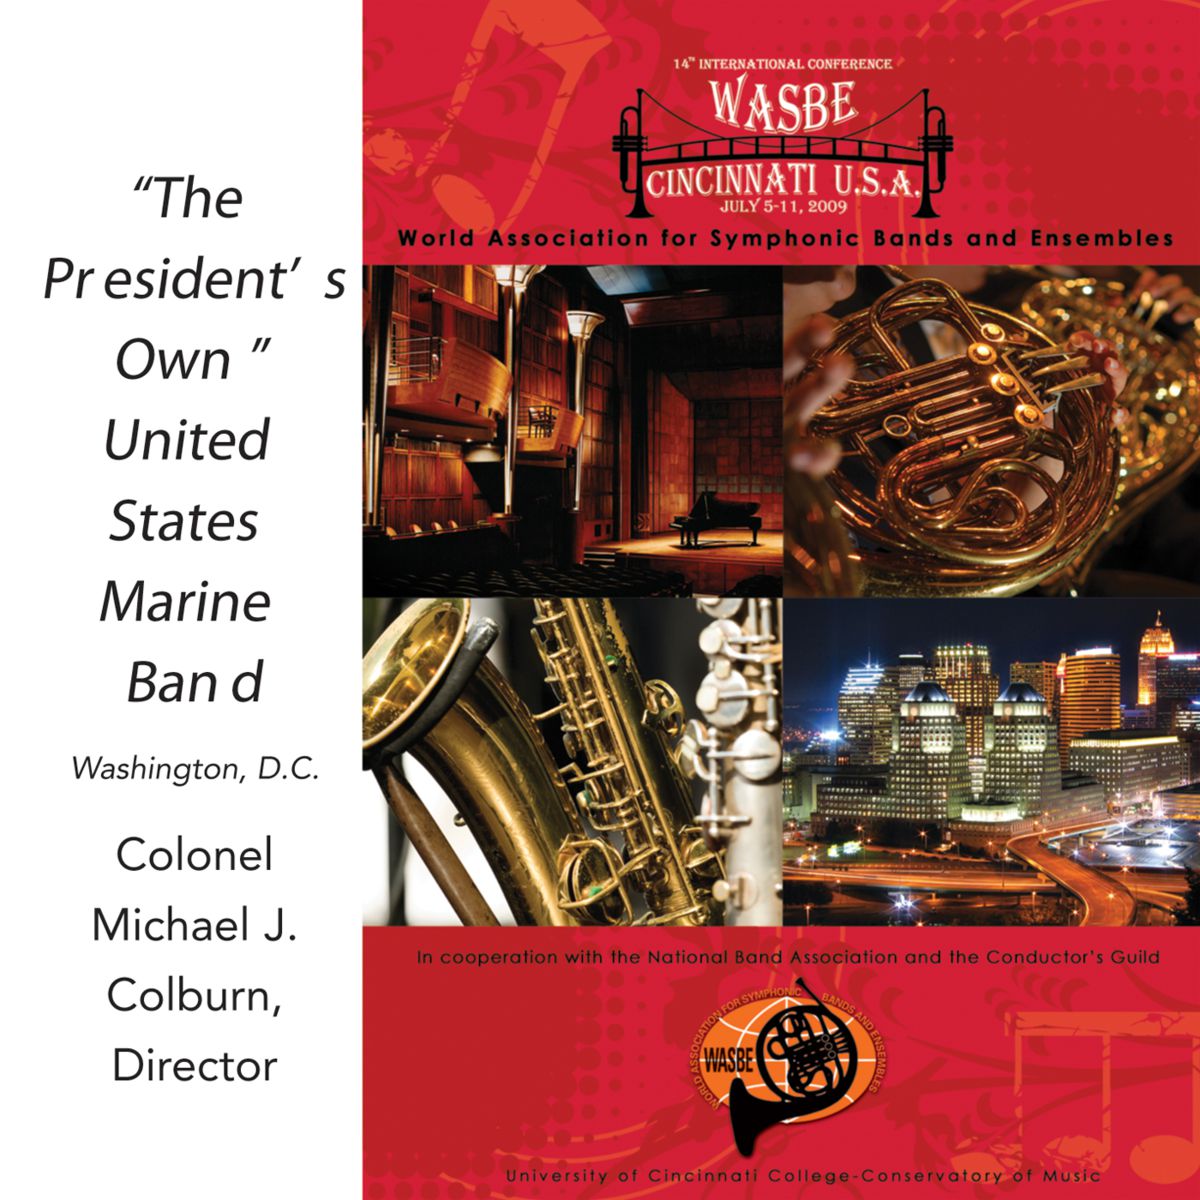 2009 WASBE Cincinnati, USA: "The Presidents Own" United States Marine Band - click here